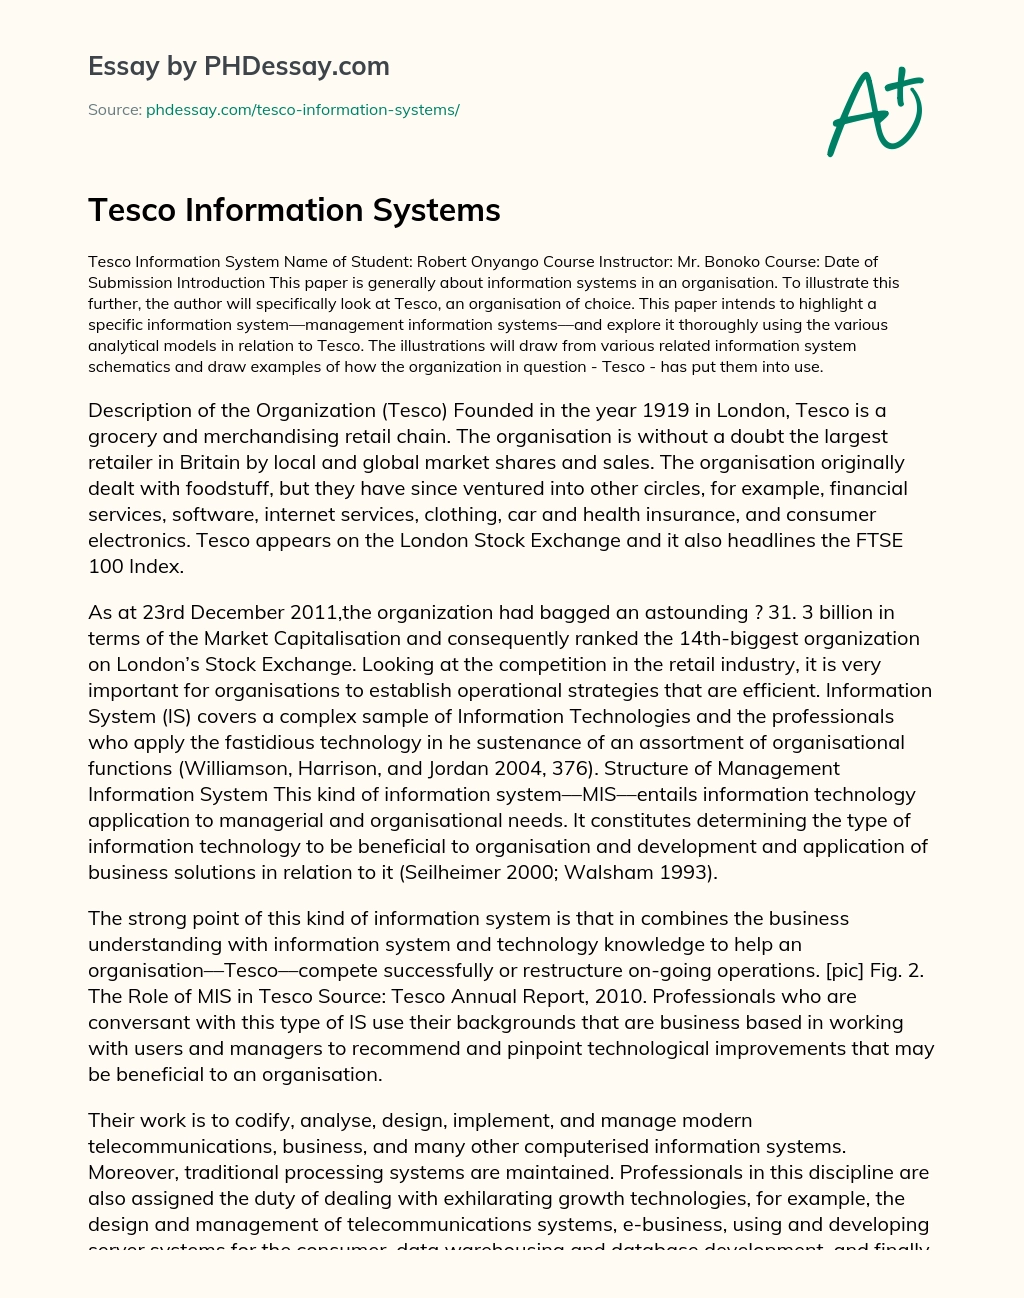 Tesco Information Systems essay